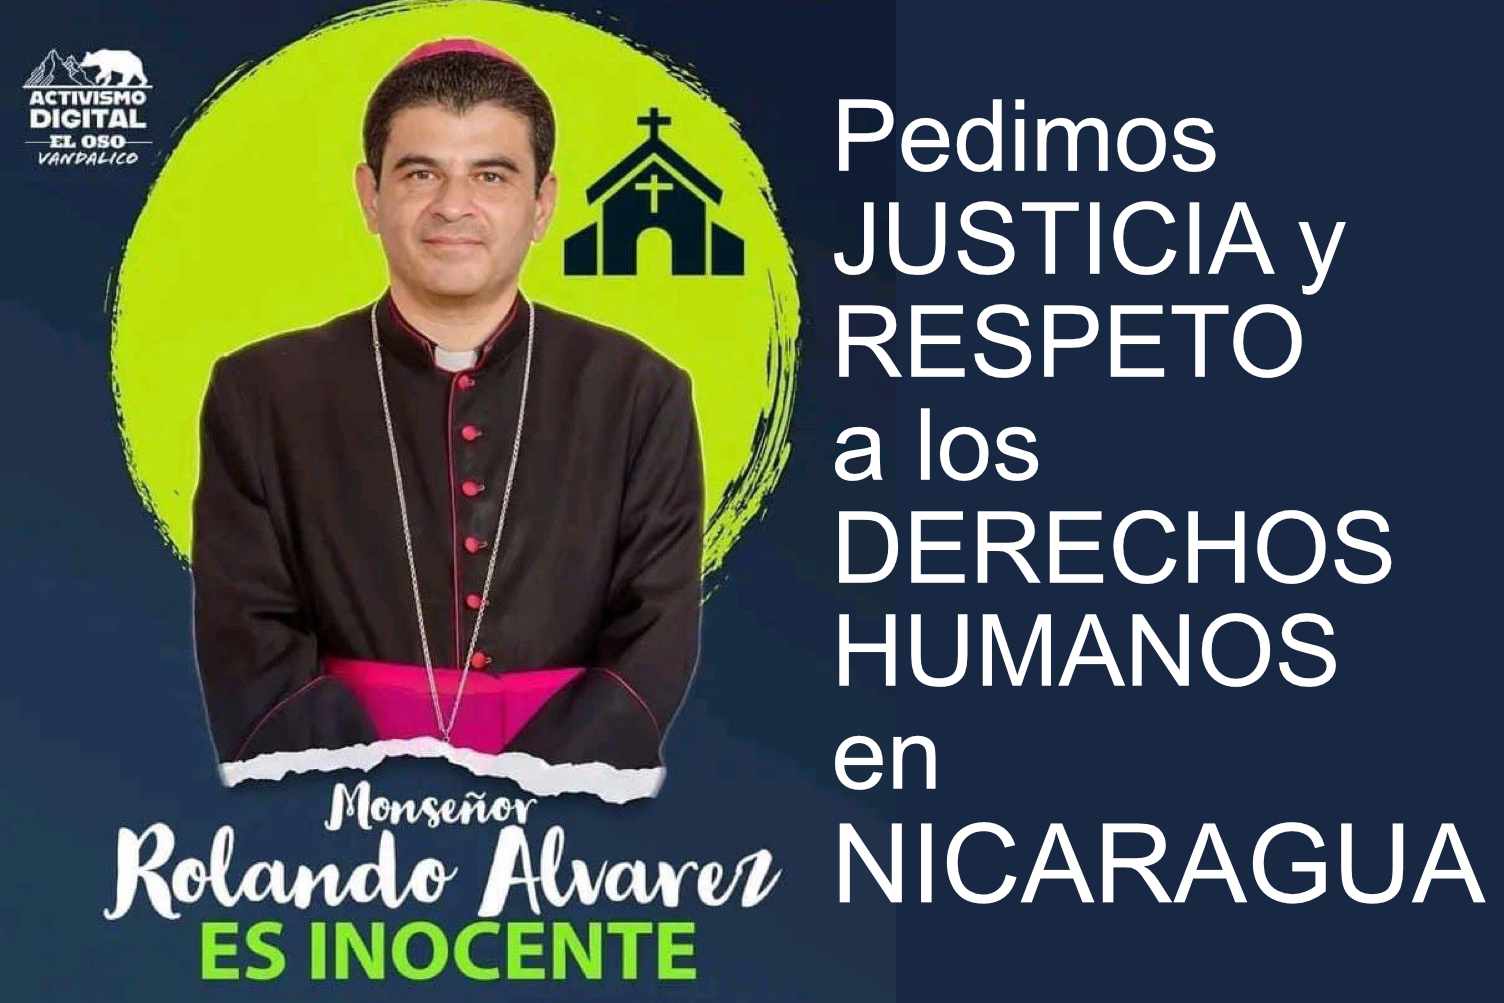 Rolando Álvarez inocenteqq2